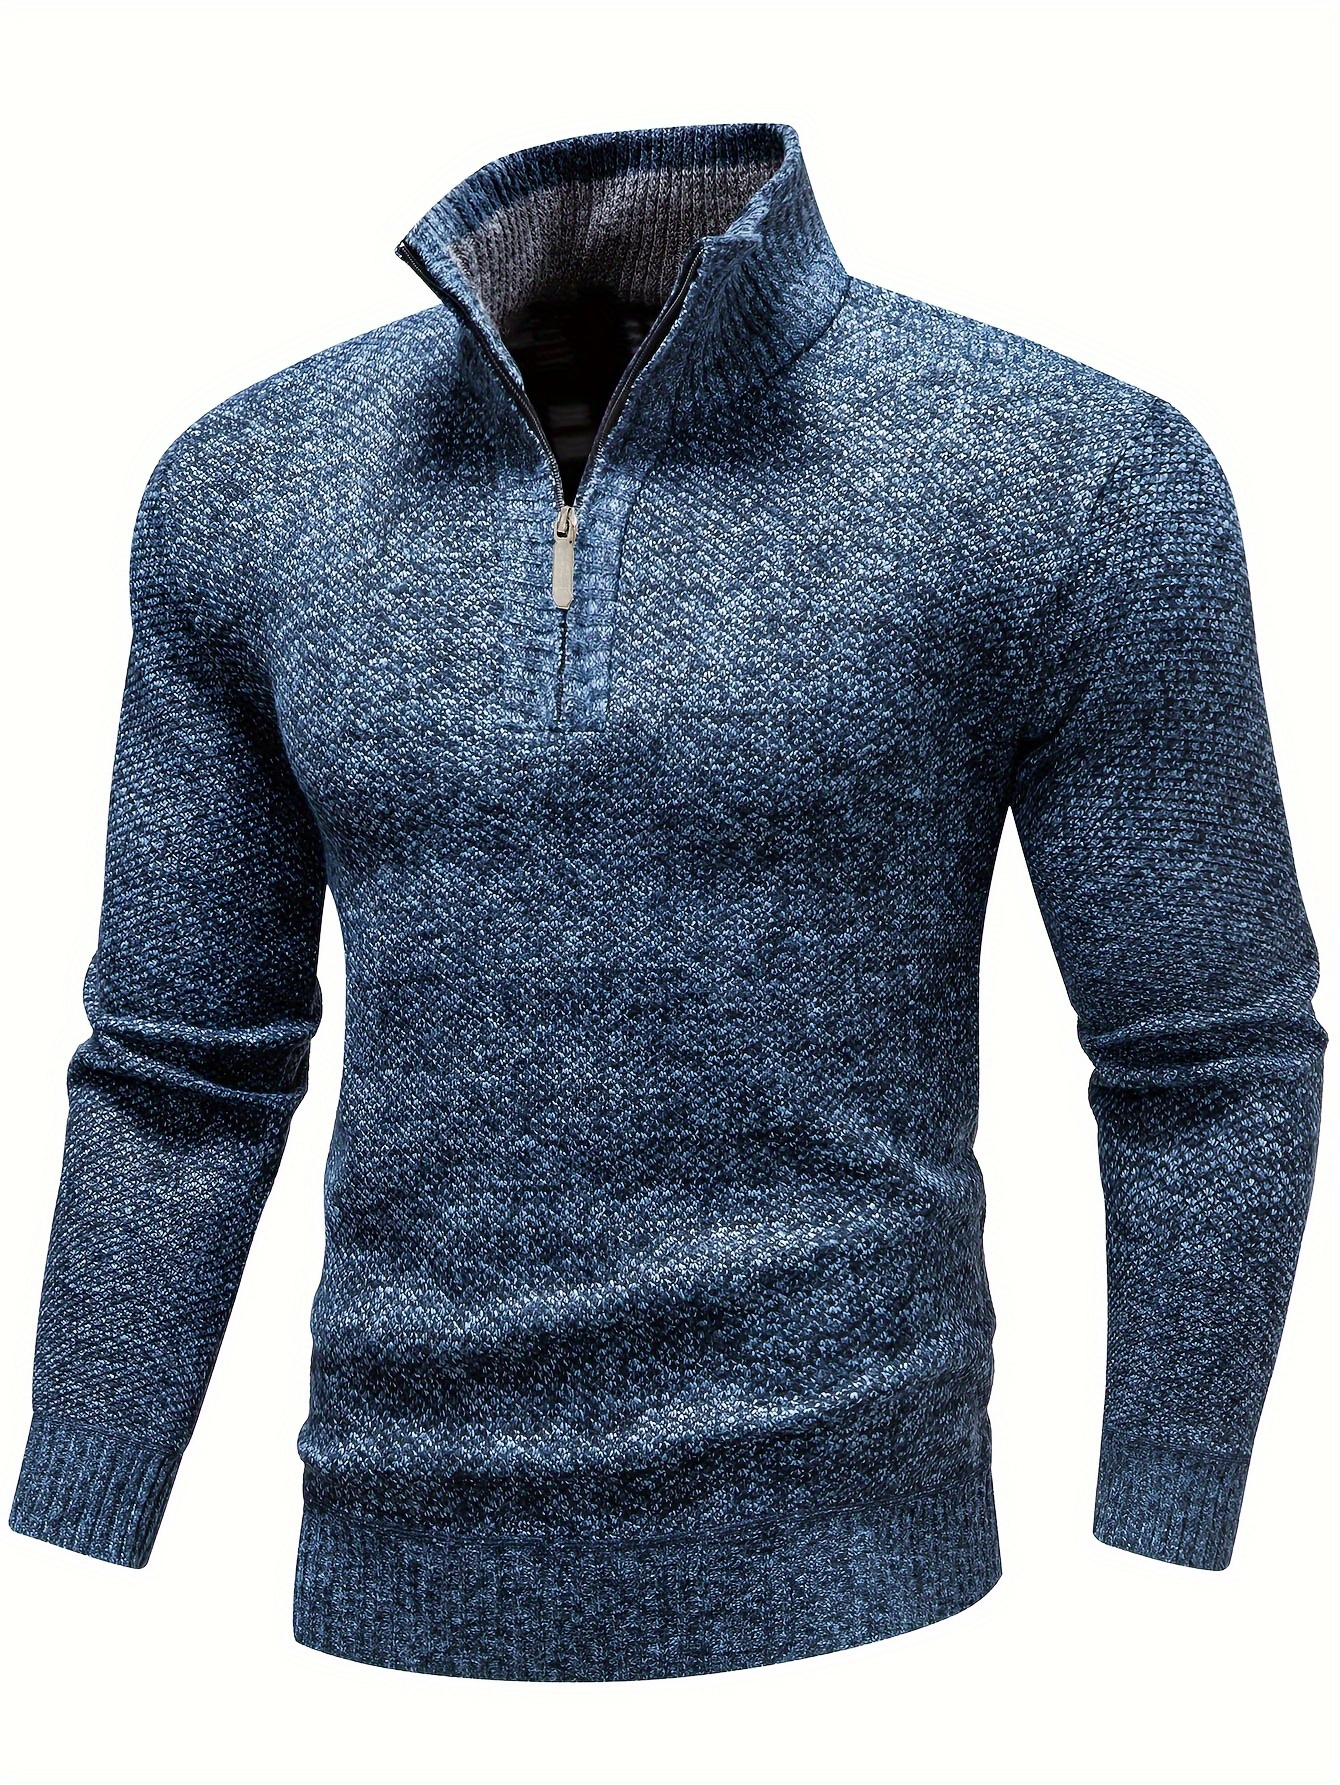 Hombres moda Casual manga larga cuello alto invierno tejido grueso Casual  cálido punto suéter suéter Adepaton CJWUS-3517